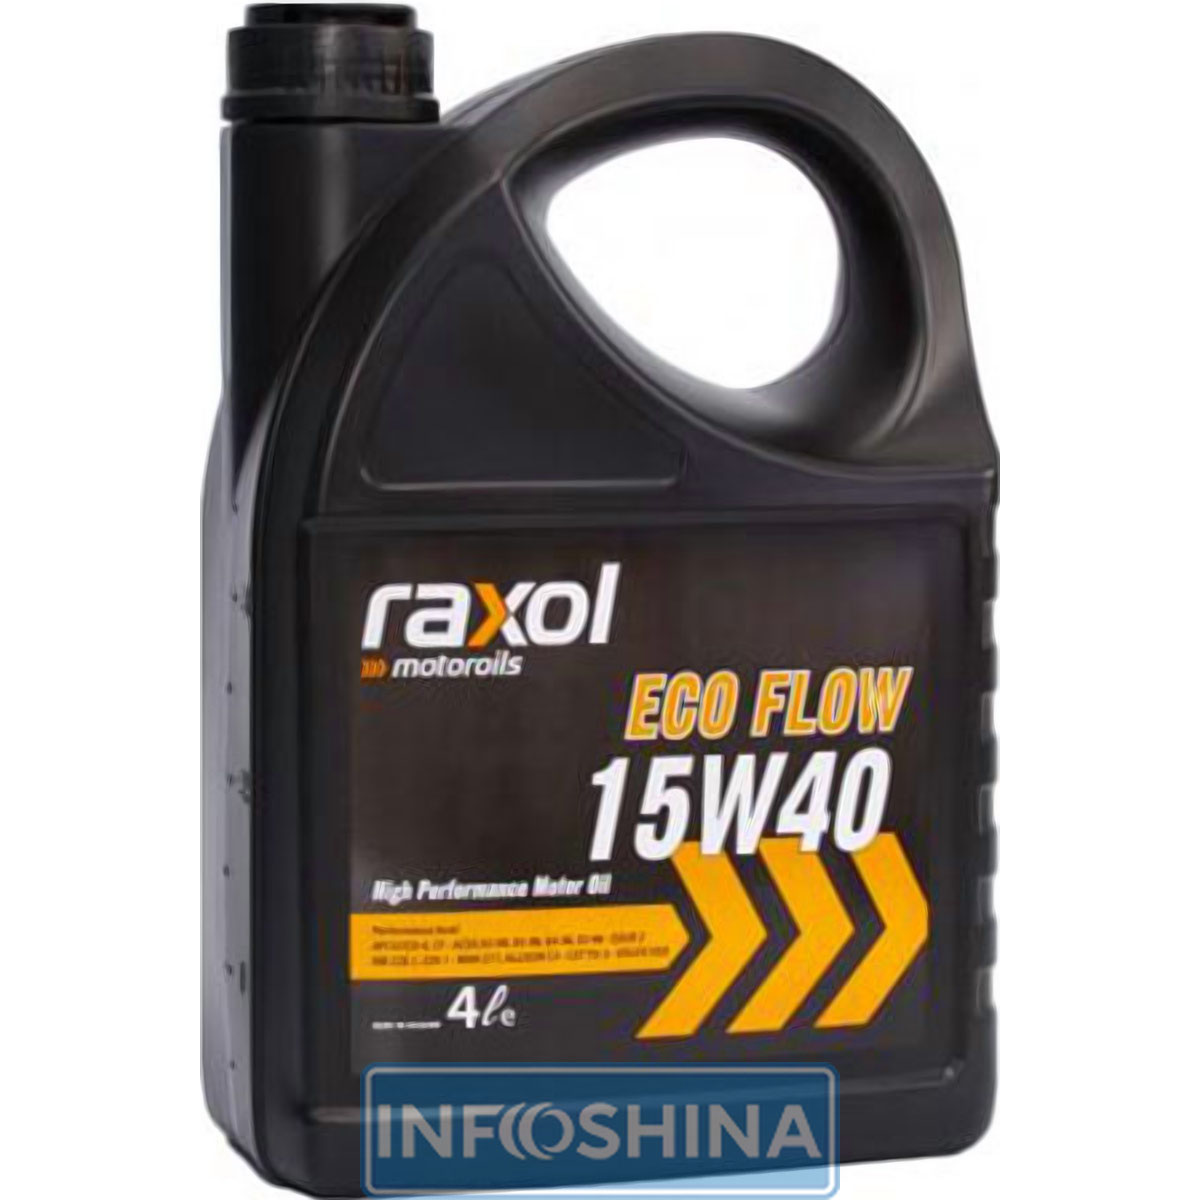 Купить масло Raxol Eco Flow 15W-40 (4л)